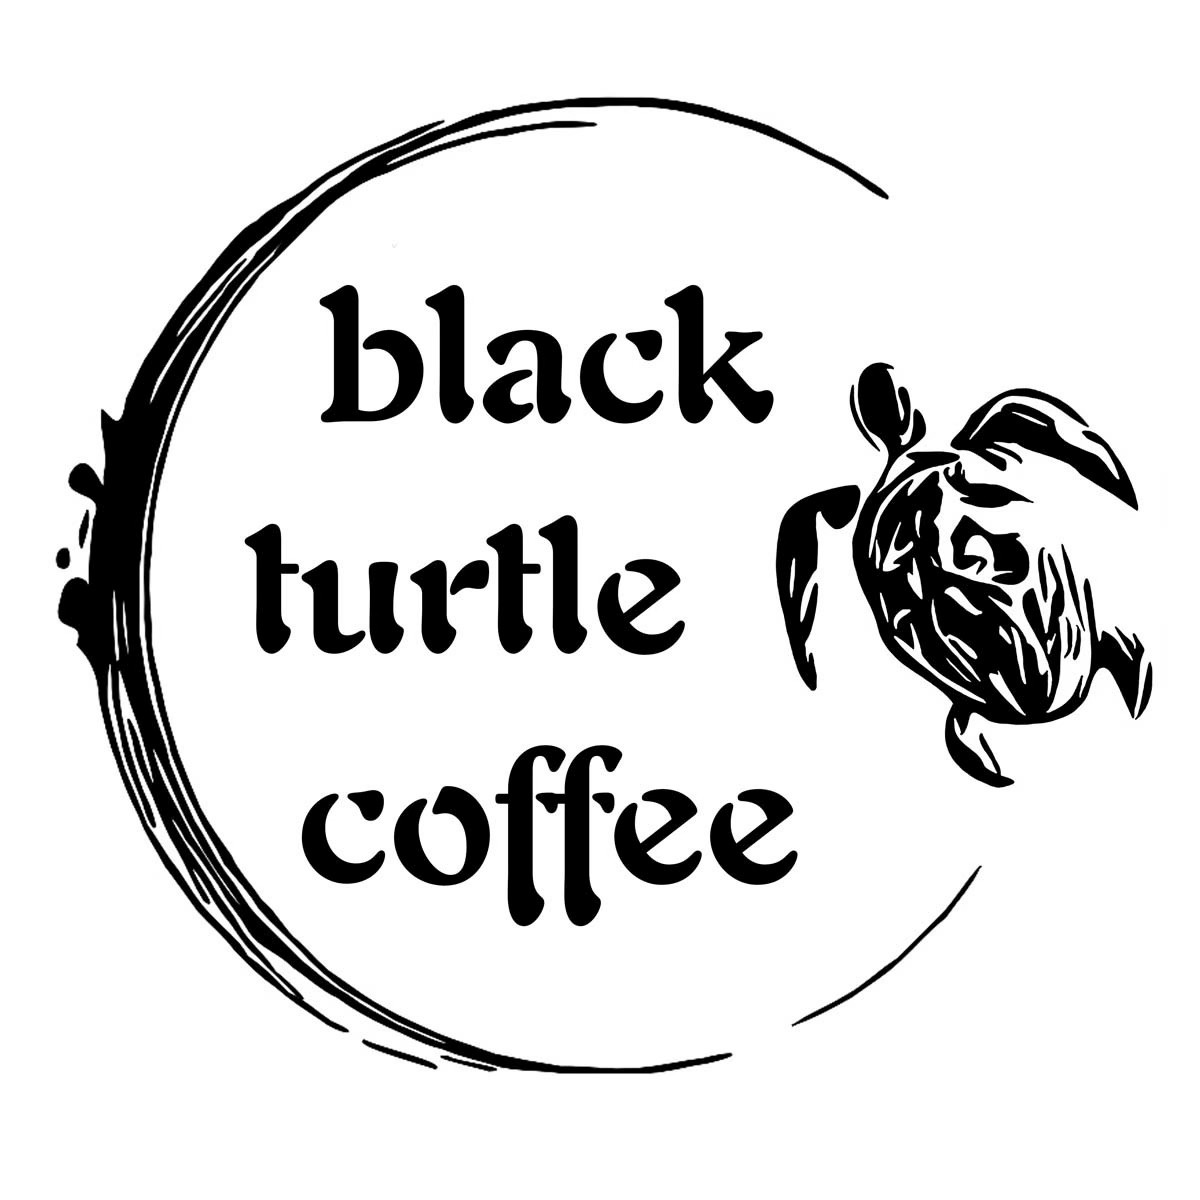 Black Turtle Coffee 3101 Revere Blvd